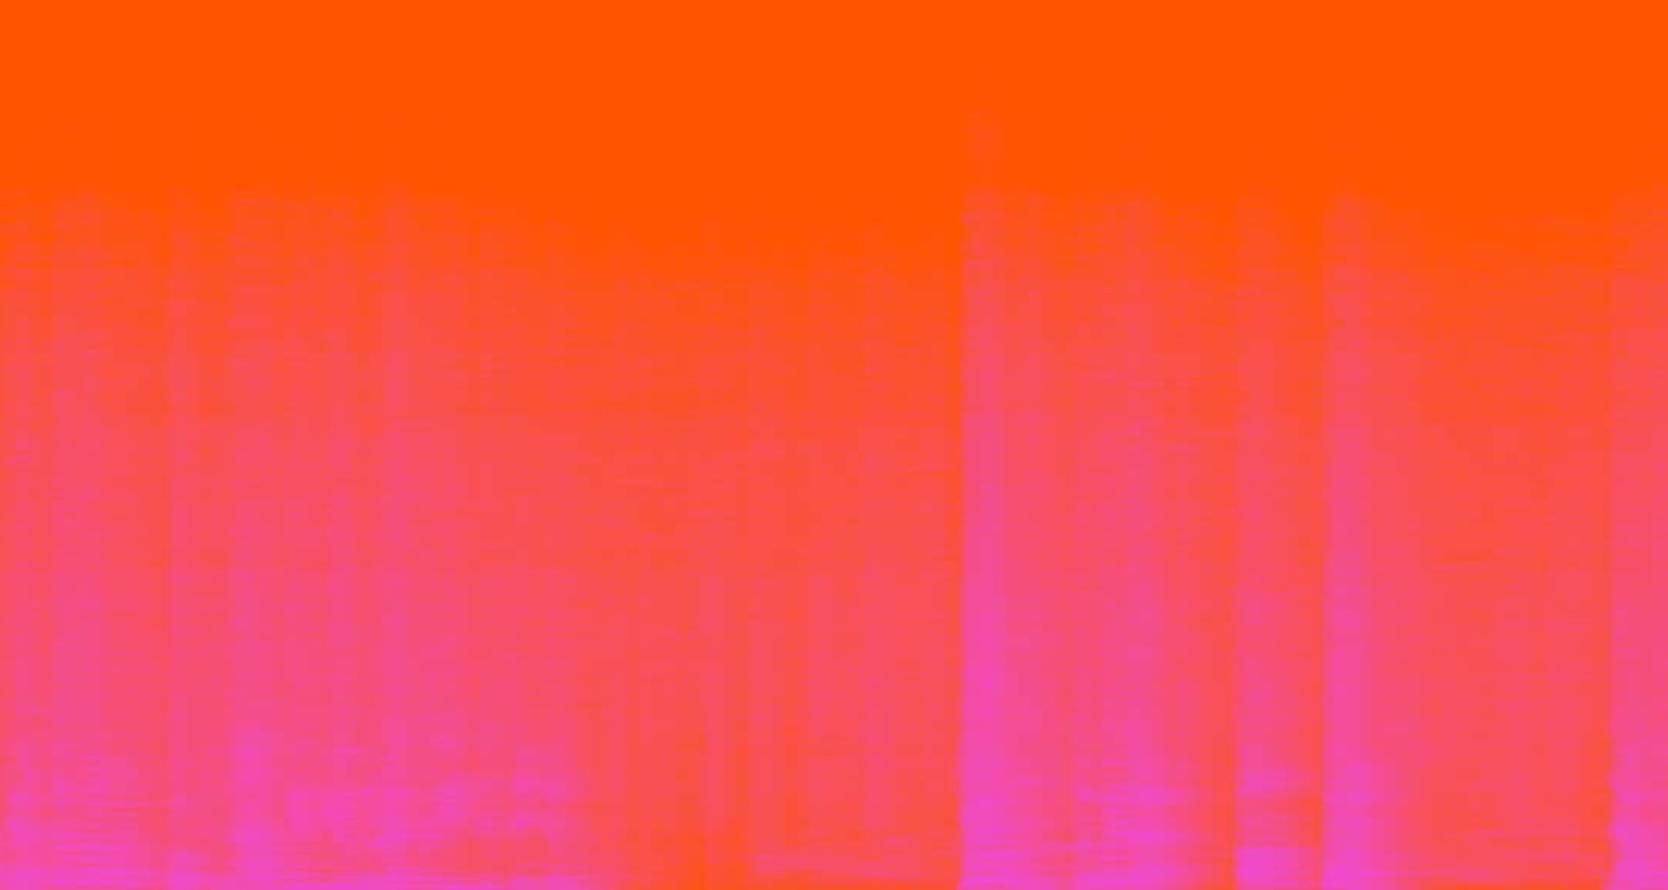 orange and pink graphic of audio spectrogram